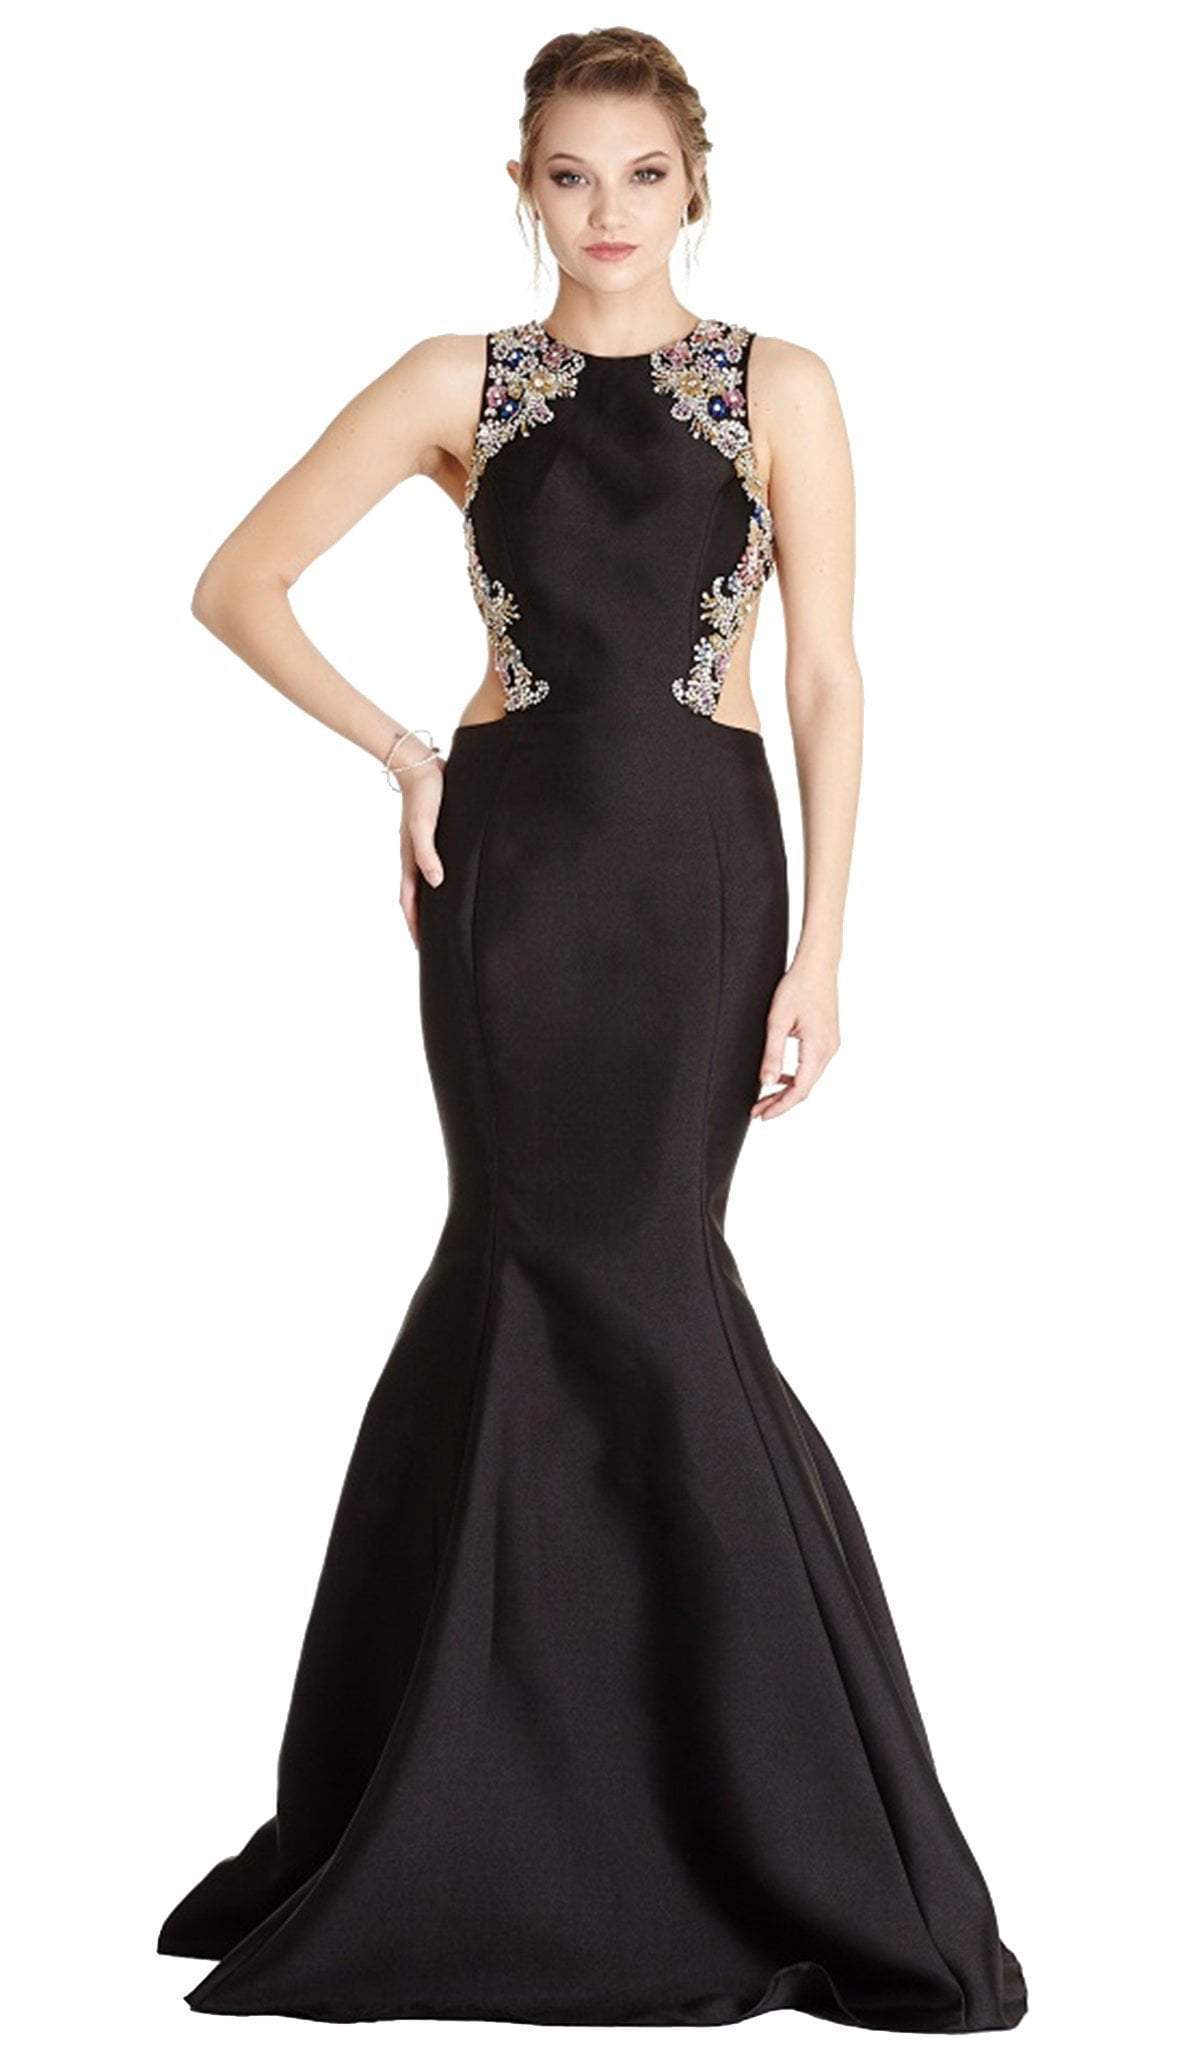 Aspeed Design - Embellished Jewel Neck Mermaid Evening Dress
